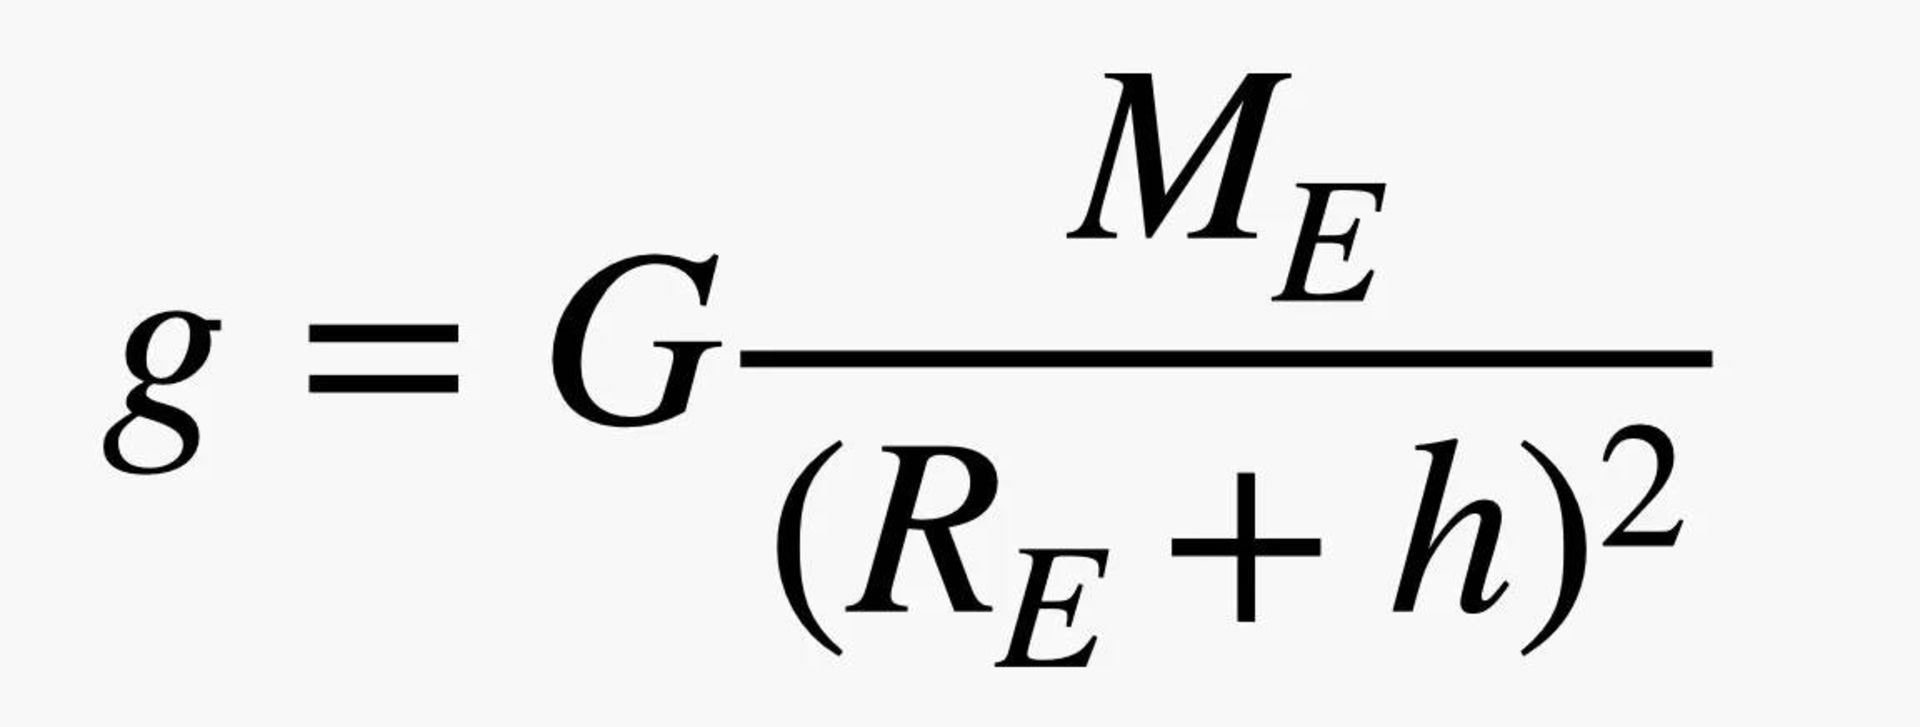 فرمول میدان گرانشی